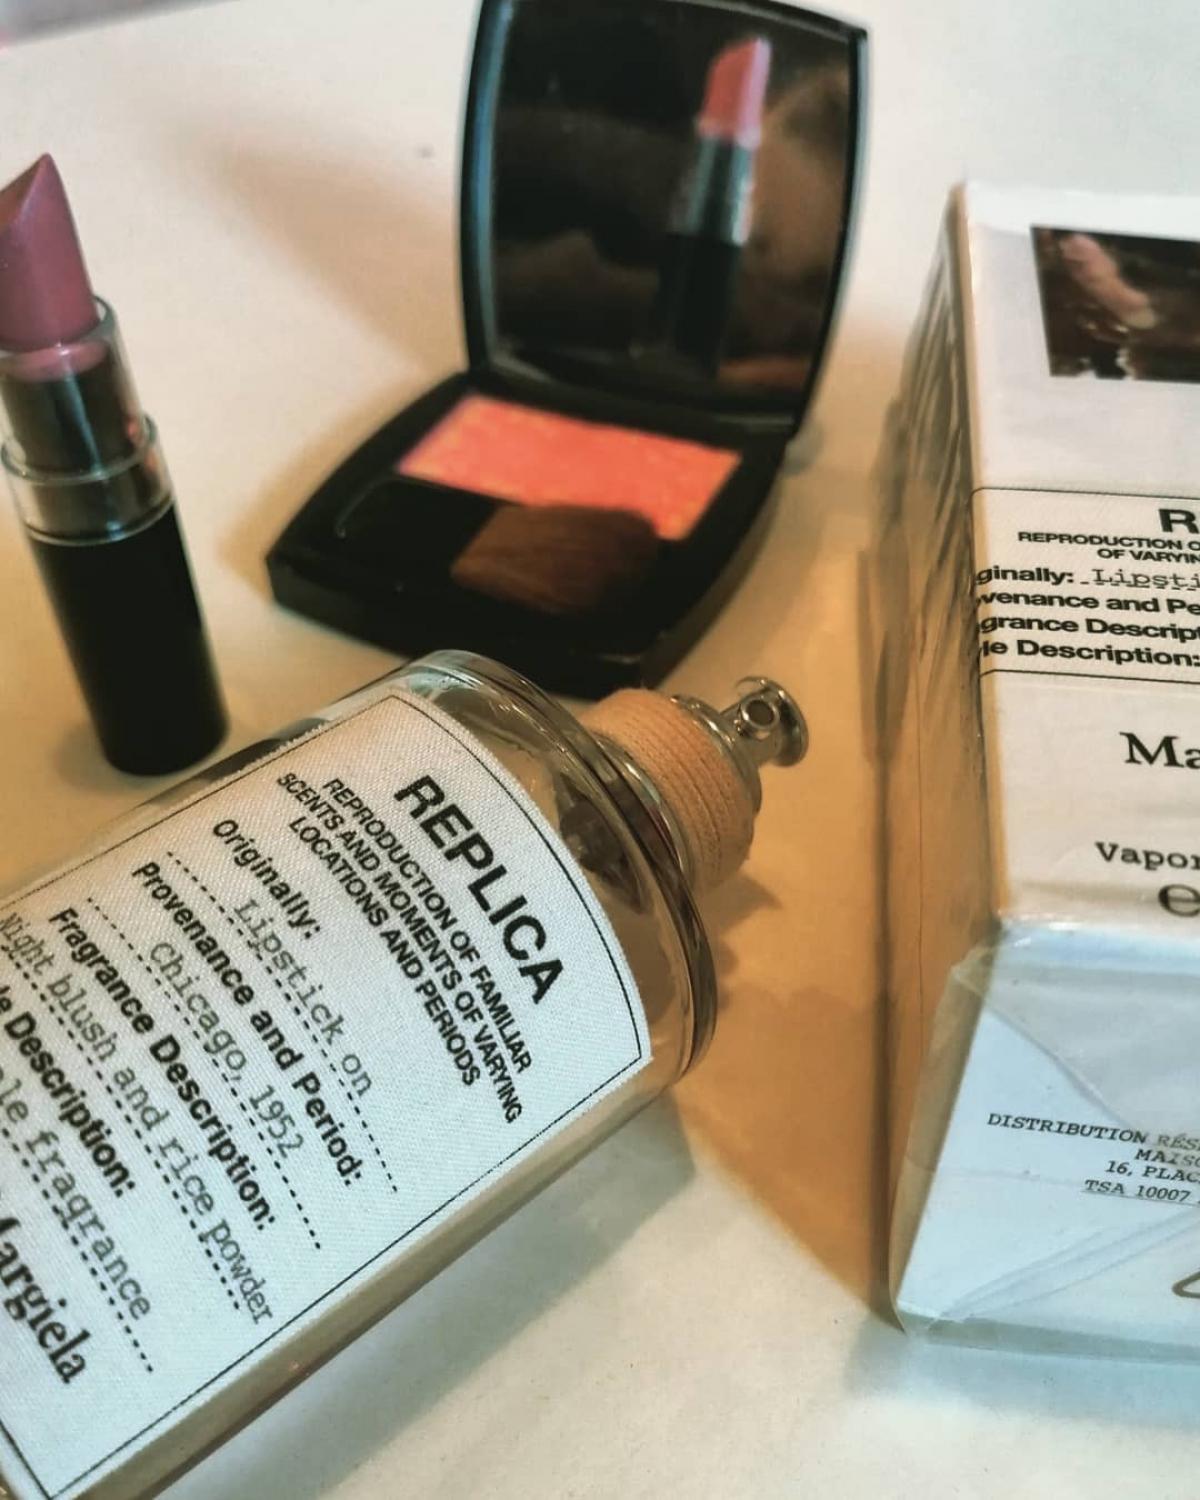 Lipstick On Maison Martin Margiela perfume - a fragrance for women 2015